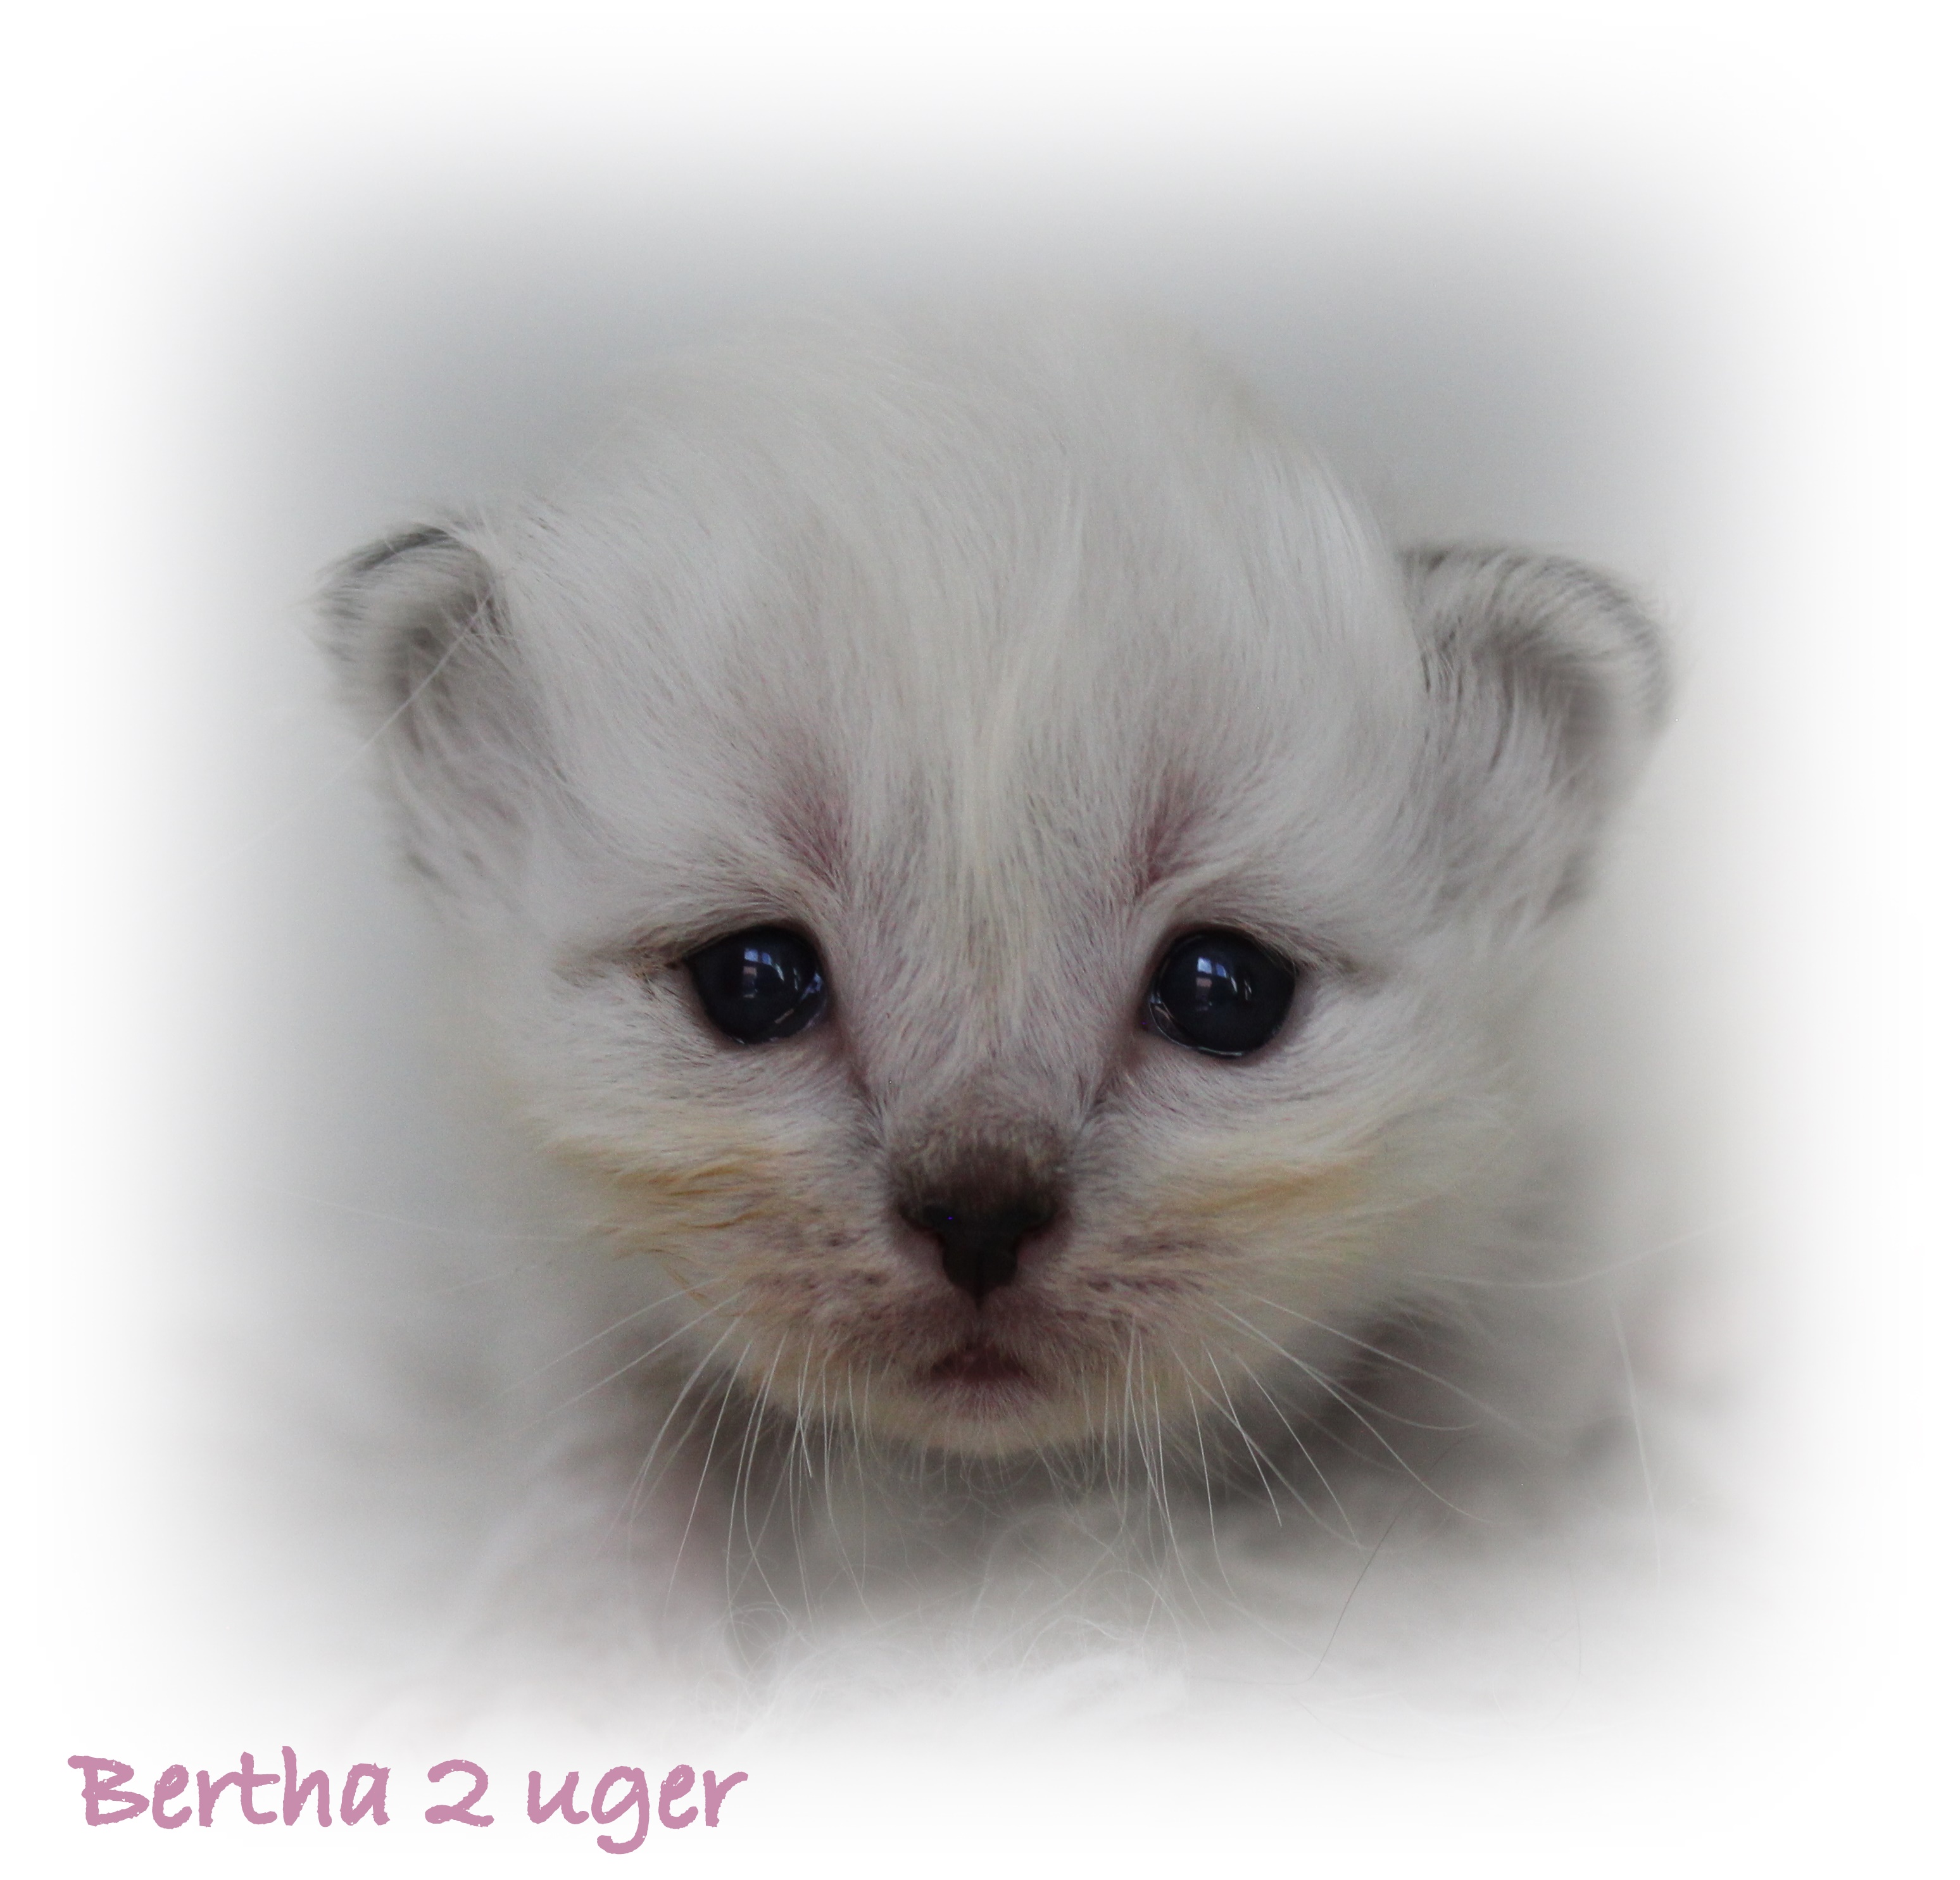 2 uger Bertha